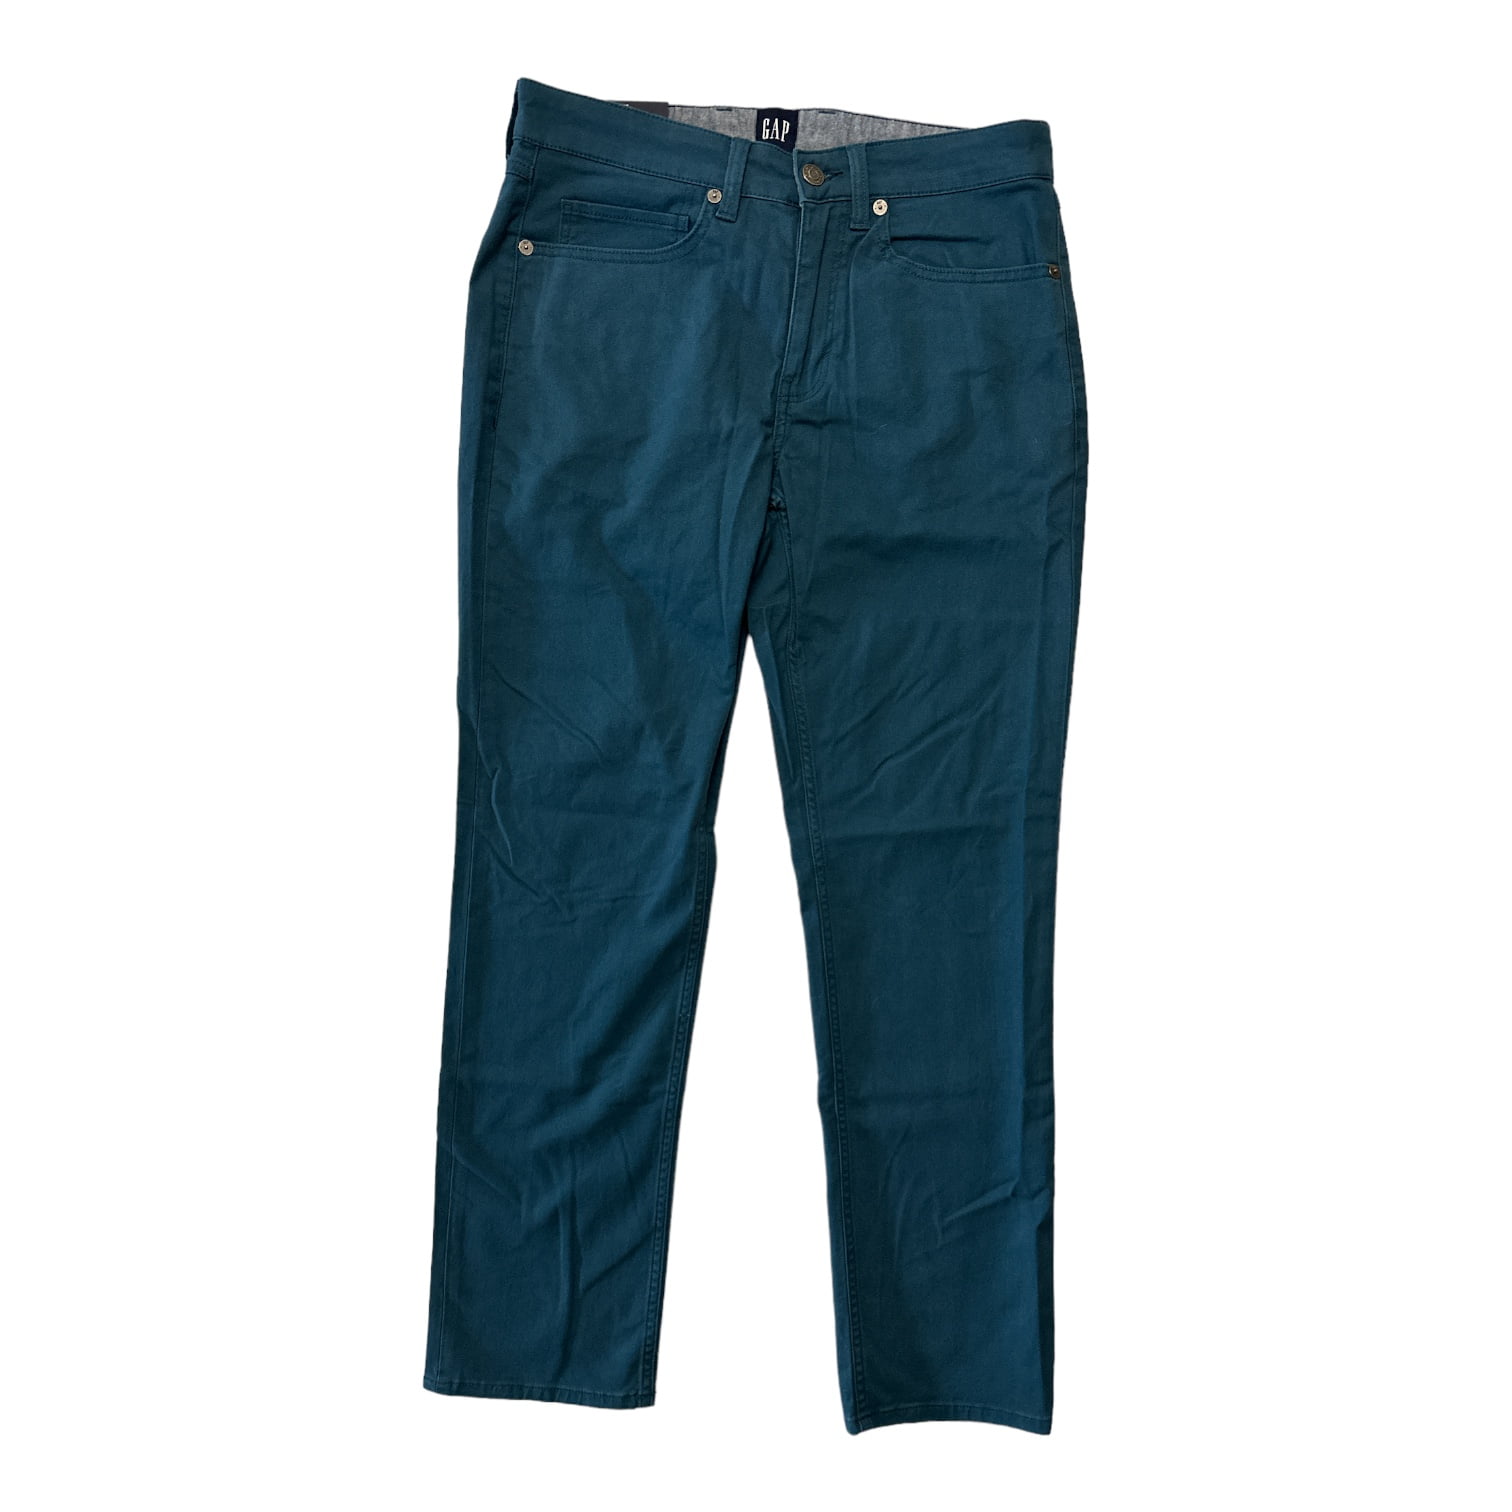 Gap Men's Super Soft Stretch Twill 5 Pocket Slim Fit Pant (Dark